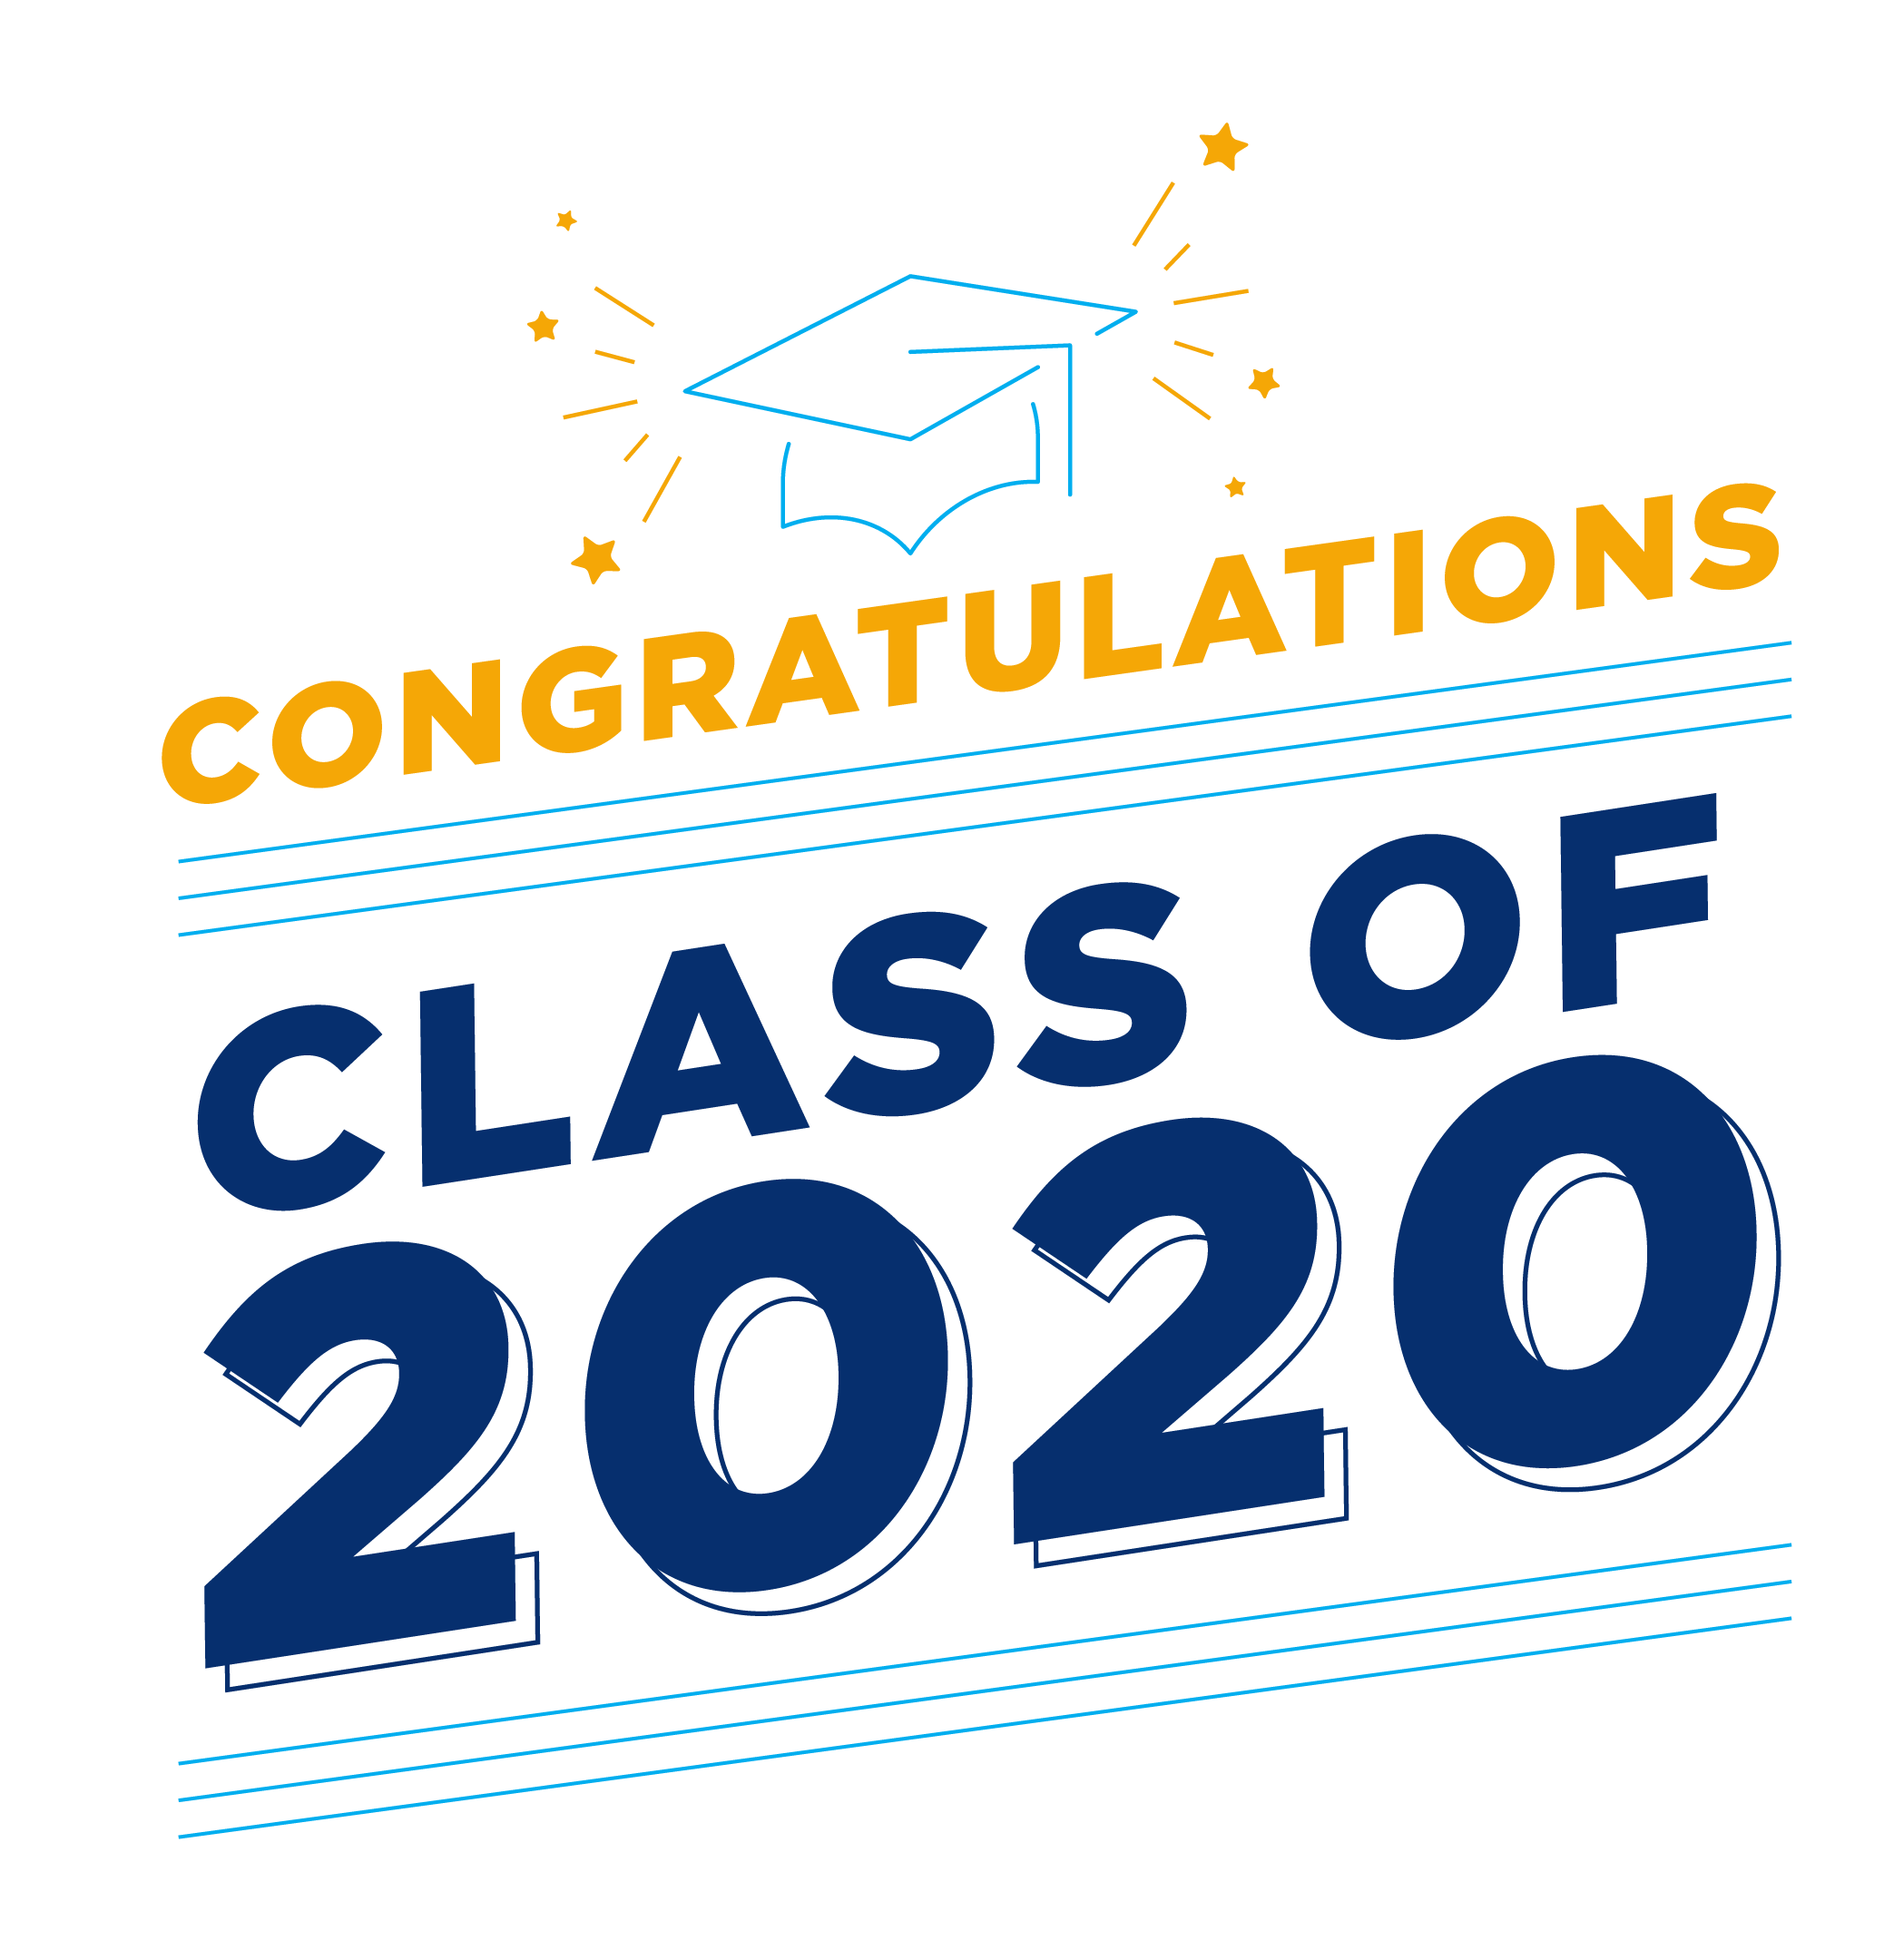 Congrats Class of 2020